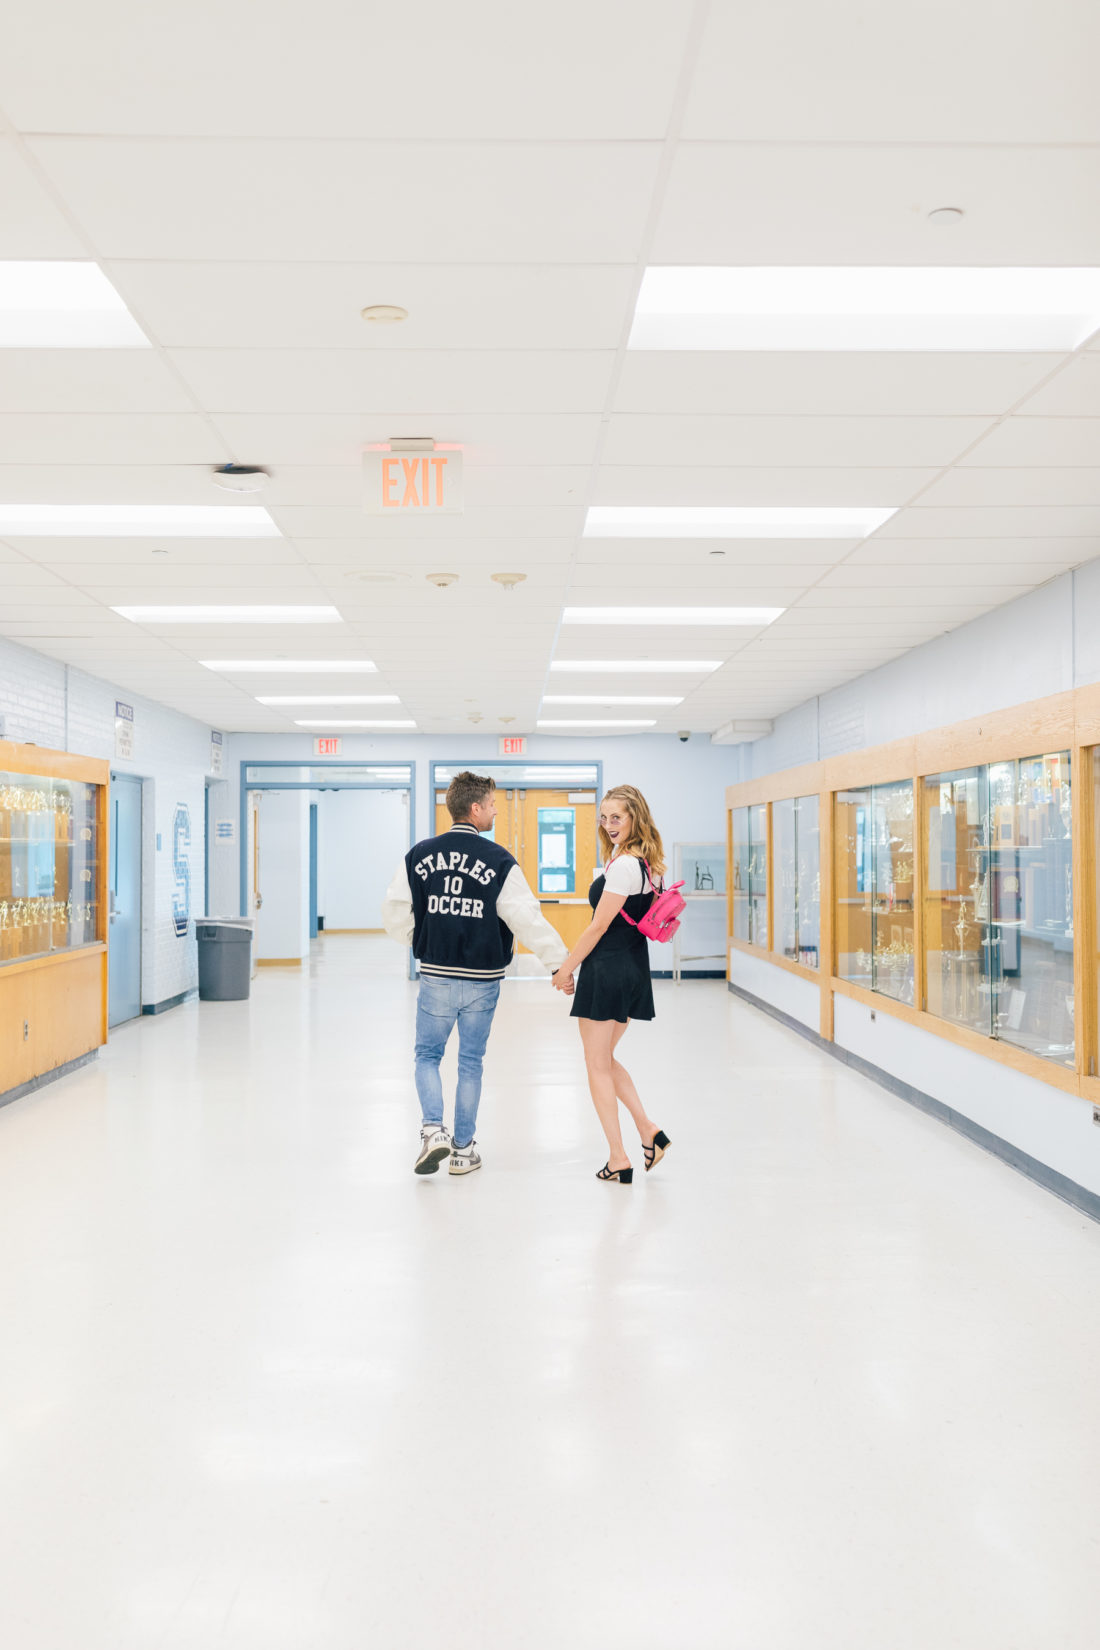 Eva Amurri Martino and husband Kyle wear 90's gear and walk through the halls of his high school